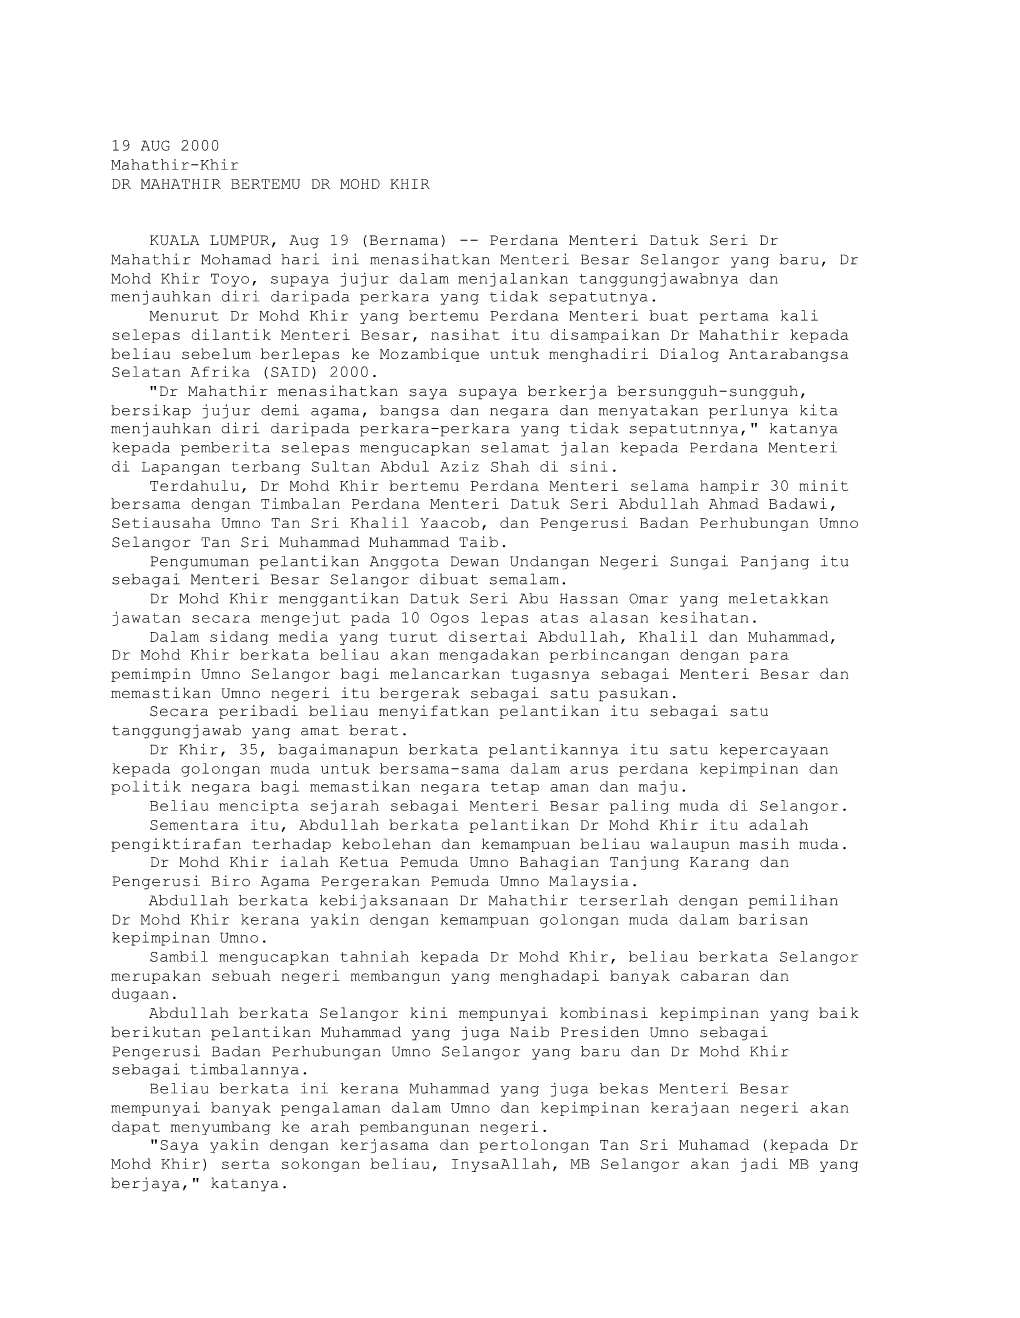 DR MAHATHIR BERTEMU DR MOHD KHIR (Bernama 19/08/2000)